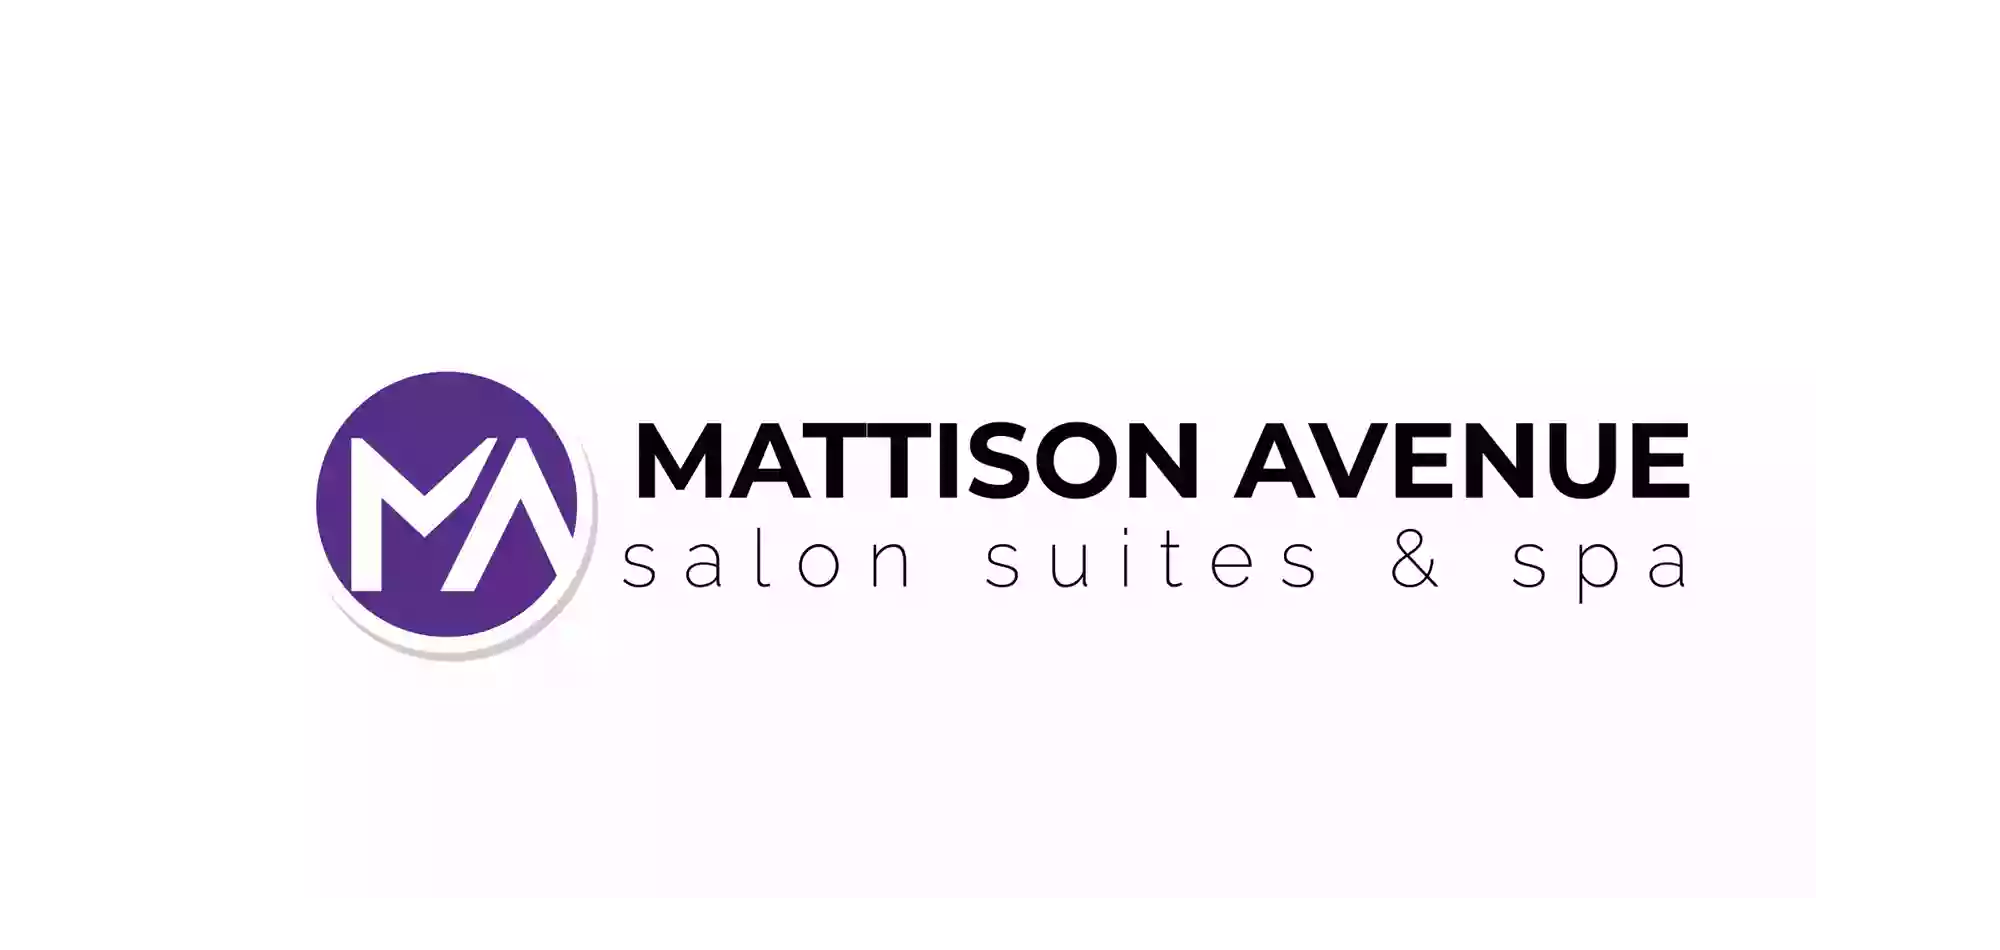 Signature Salon / Mattison Avenue Salon Suites